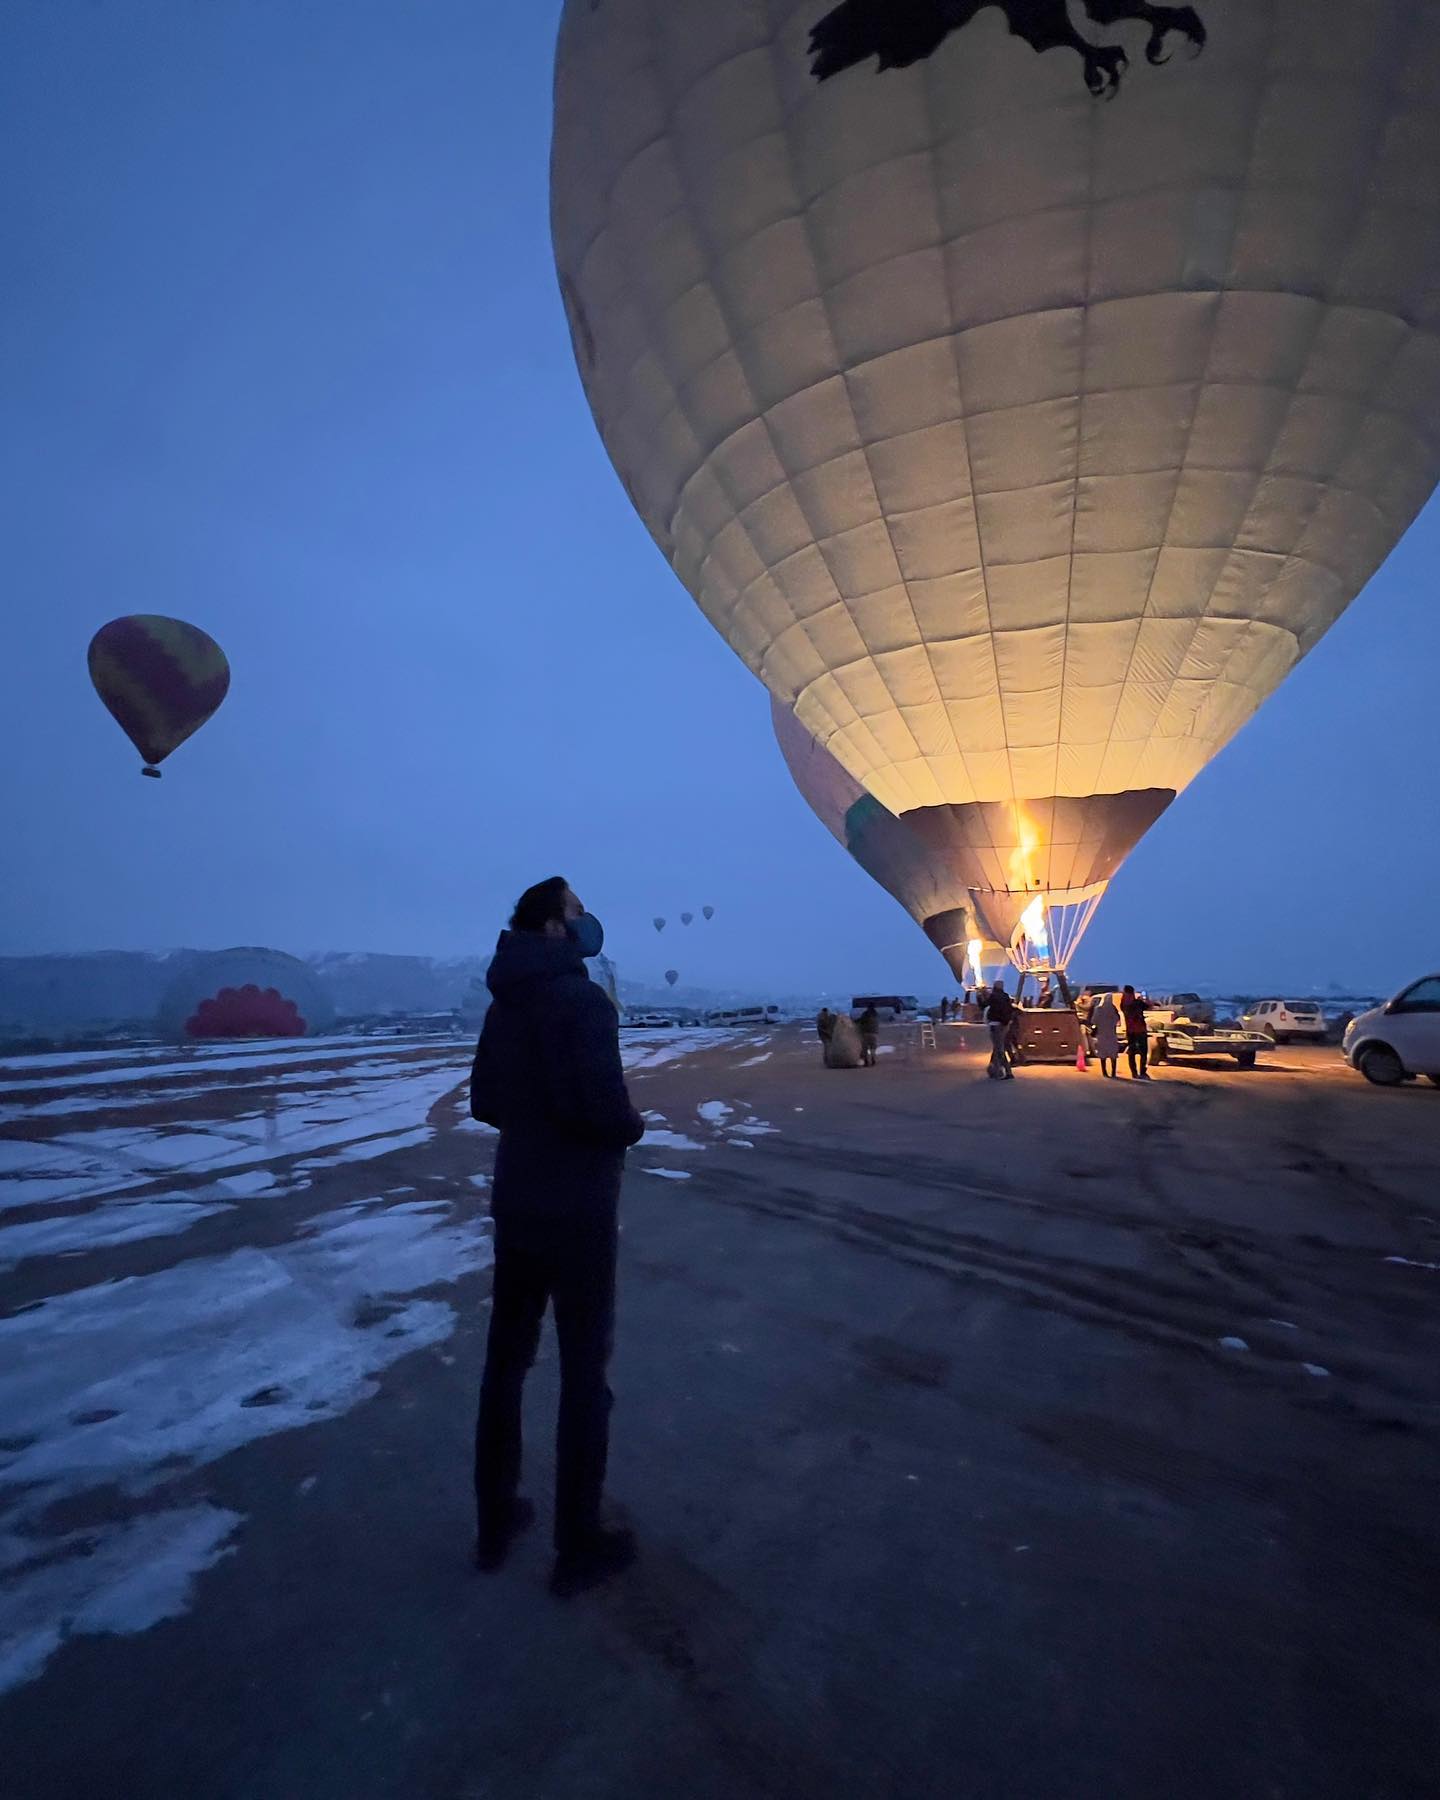 Asser posing in front of a balloon ride in Cappadocia. — Instagram/asser.malik